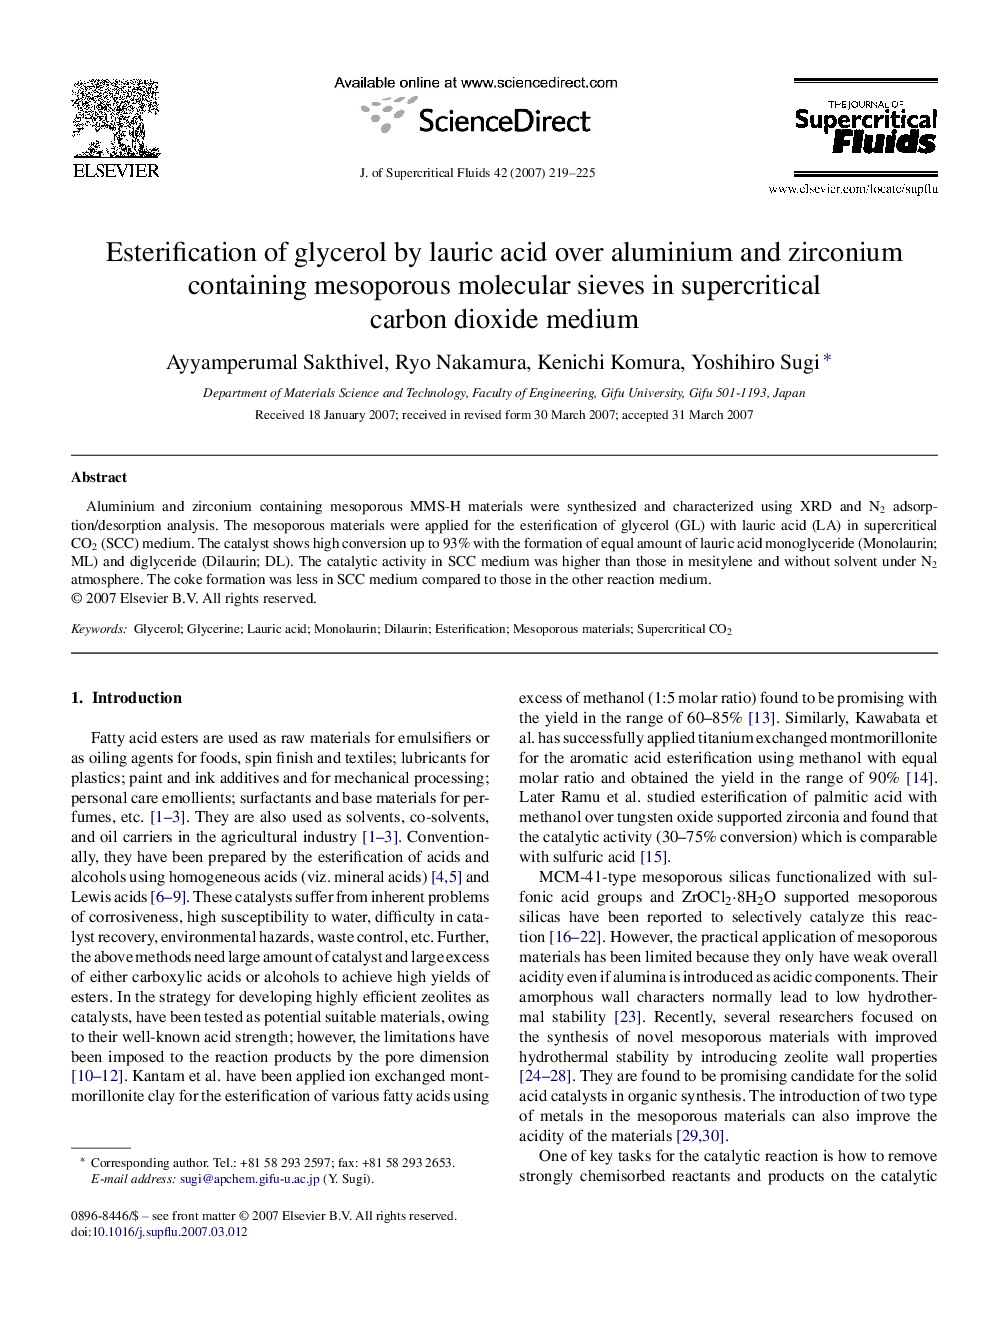 Esterification of glycerol by lauric acid over aluminium and zirconium containing mesoporous molecular sieves in supercritical carbon dioxide medium